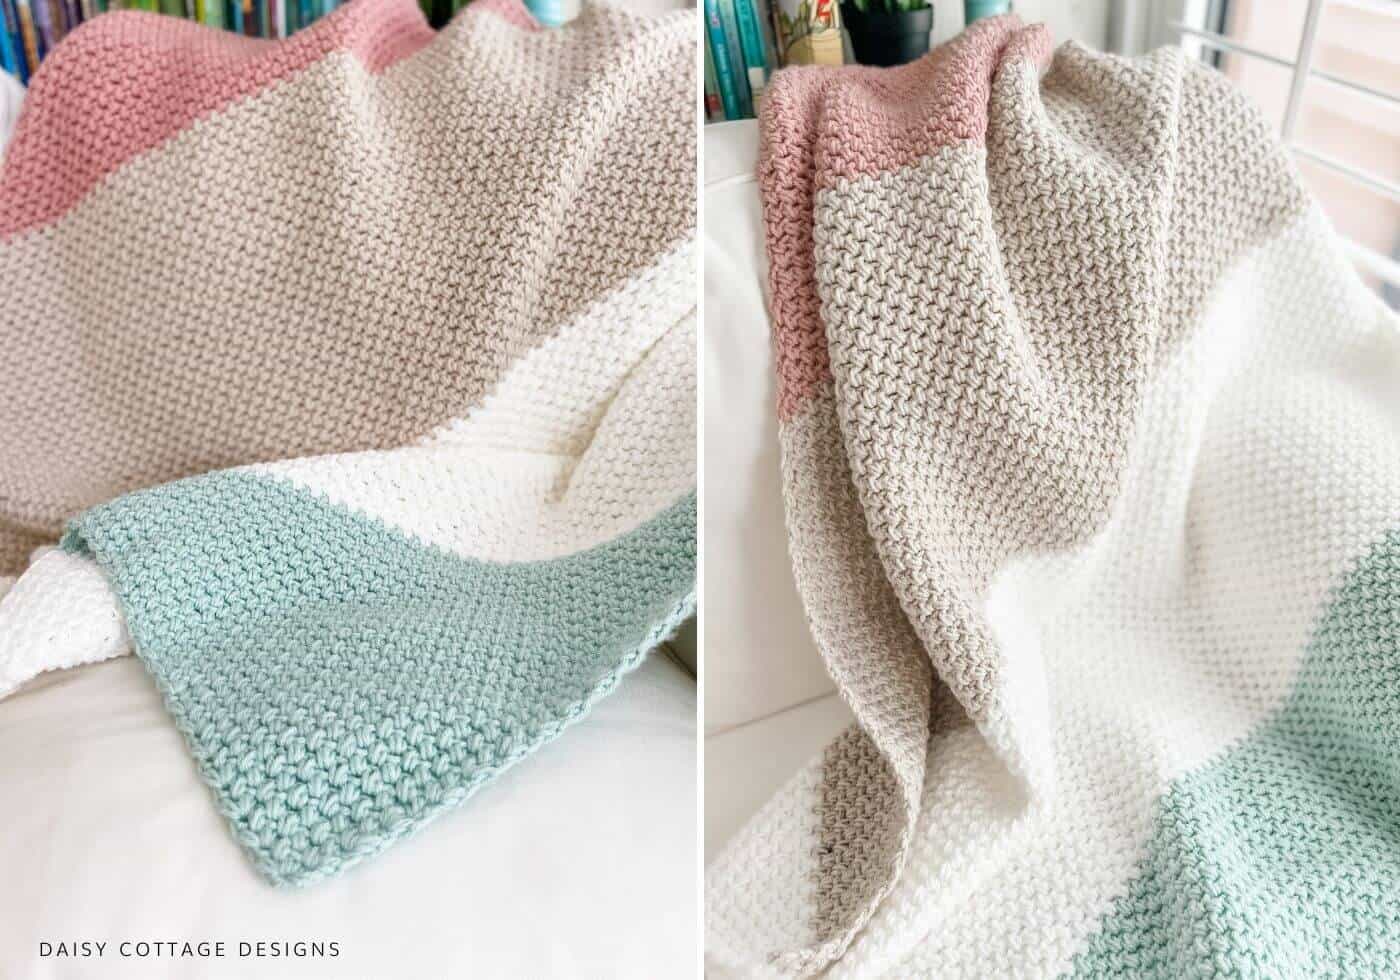 Corner to Corner Crochet Blanket from Daisy Cottage Designs